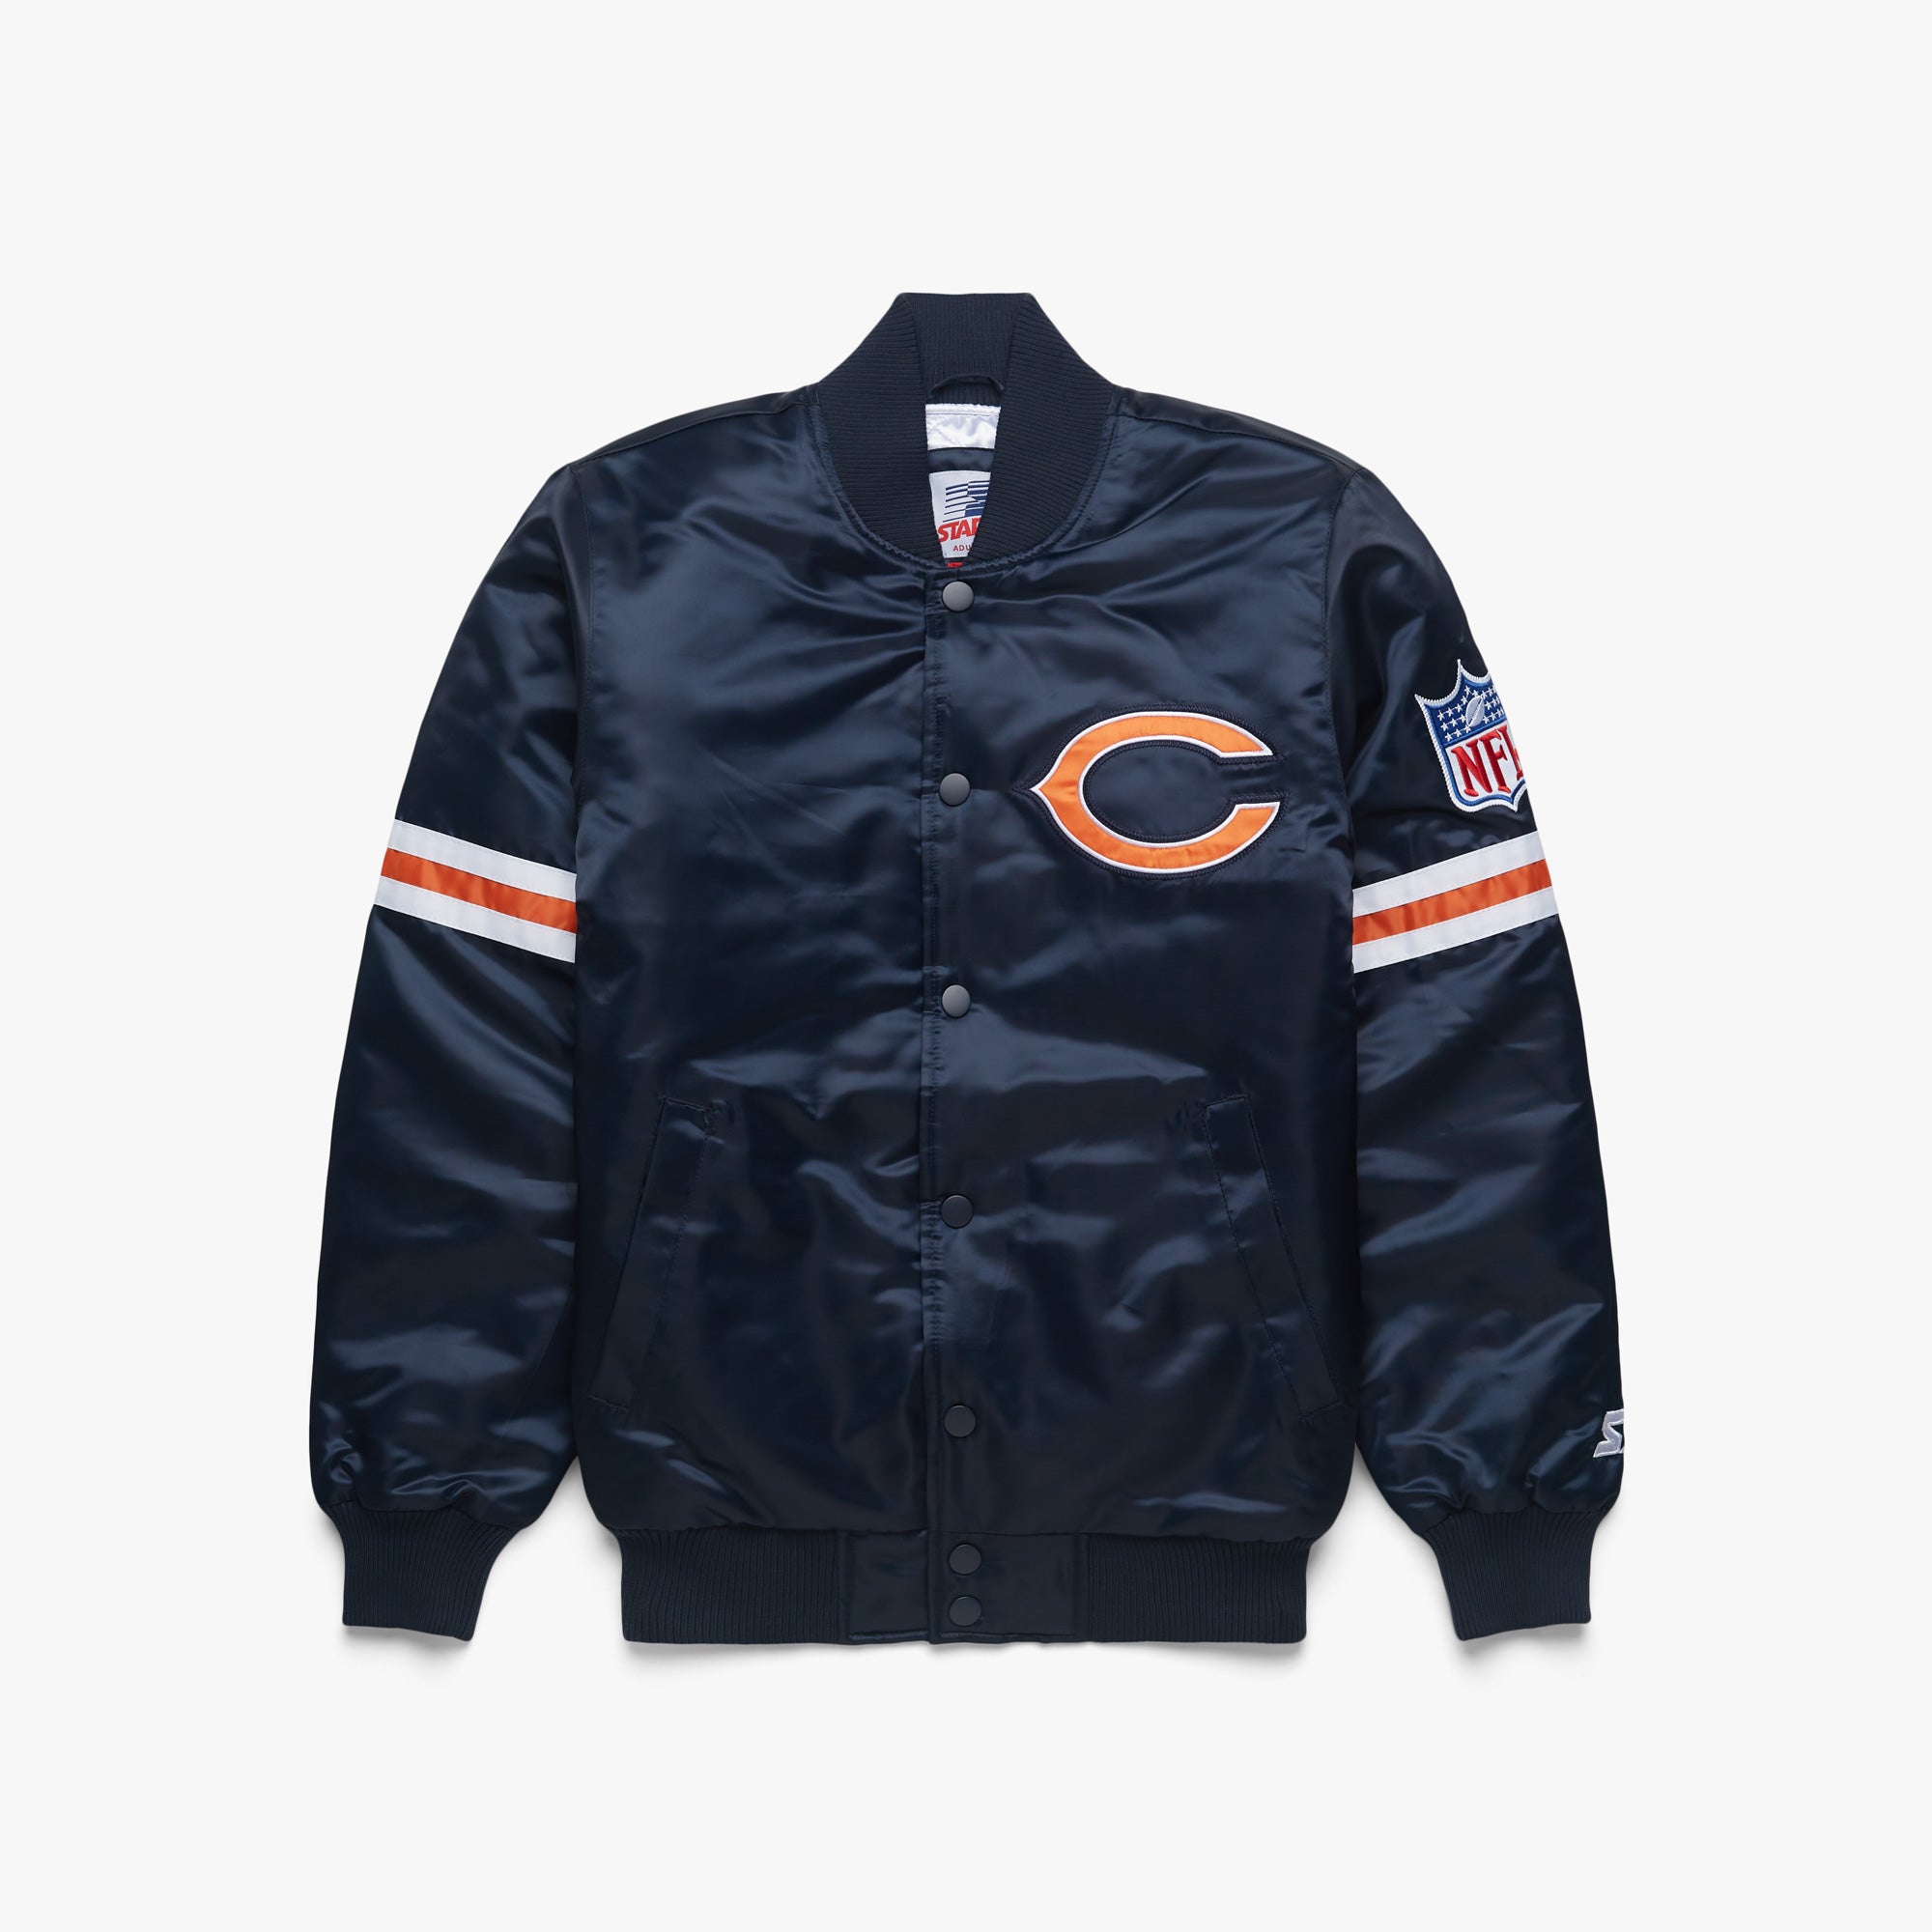 Homage x Starter Chicago Bears Satin Jacket from Homage. Officially Licensed NFL Apparel. Shop Pro 80's Starter, Gameday, & Bomber Jackets.